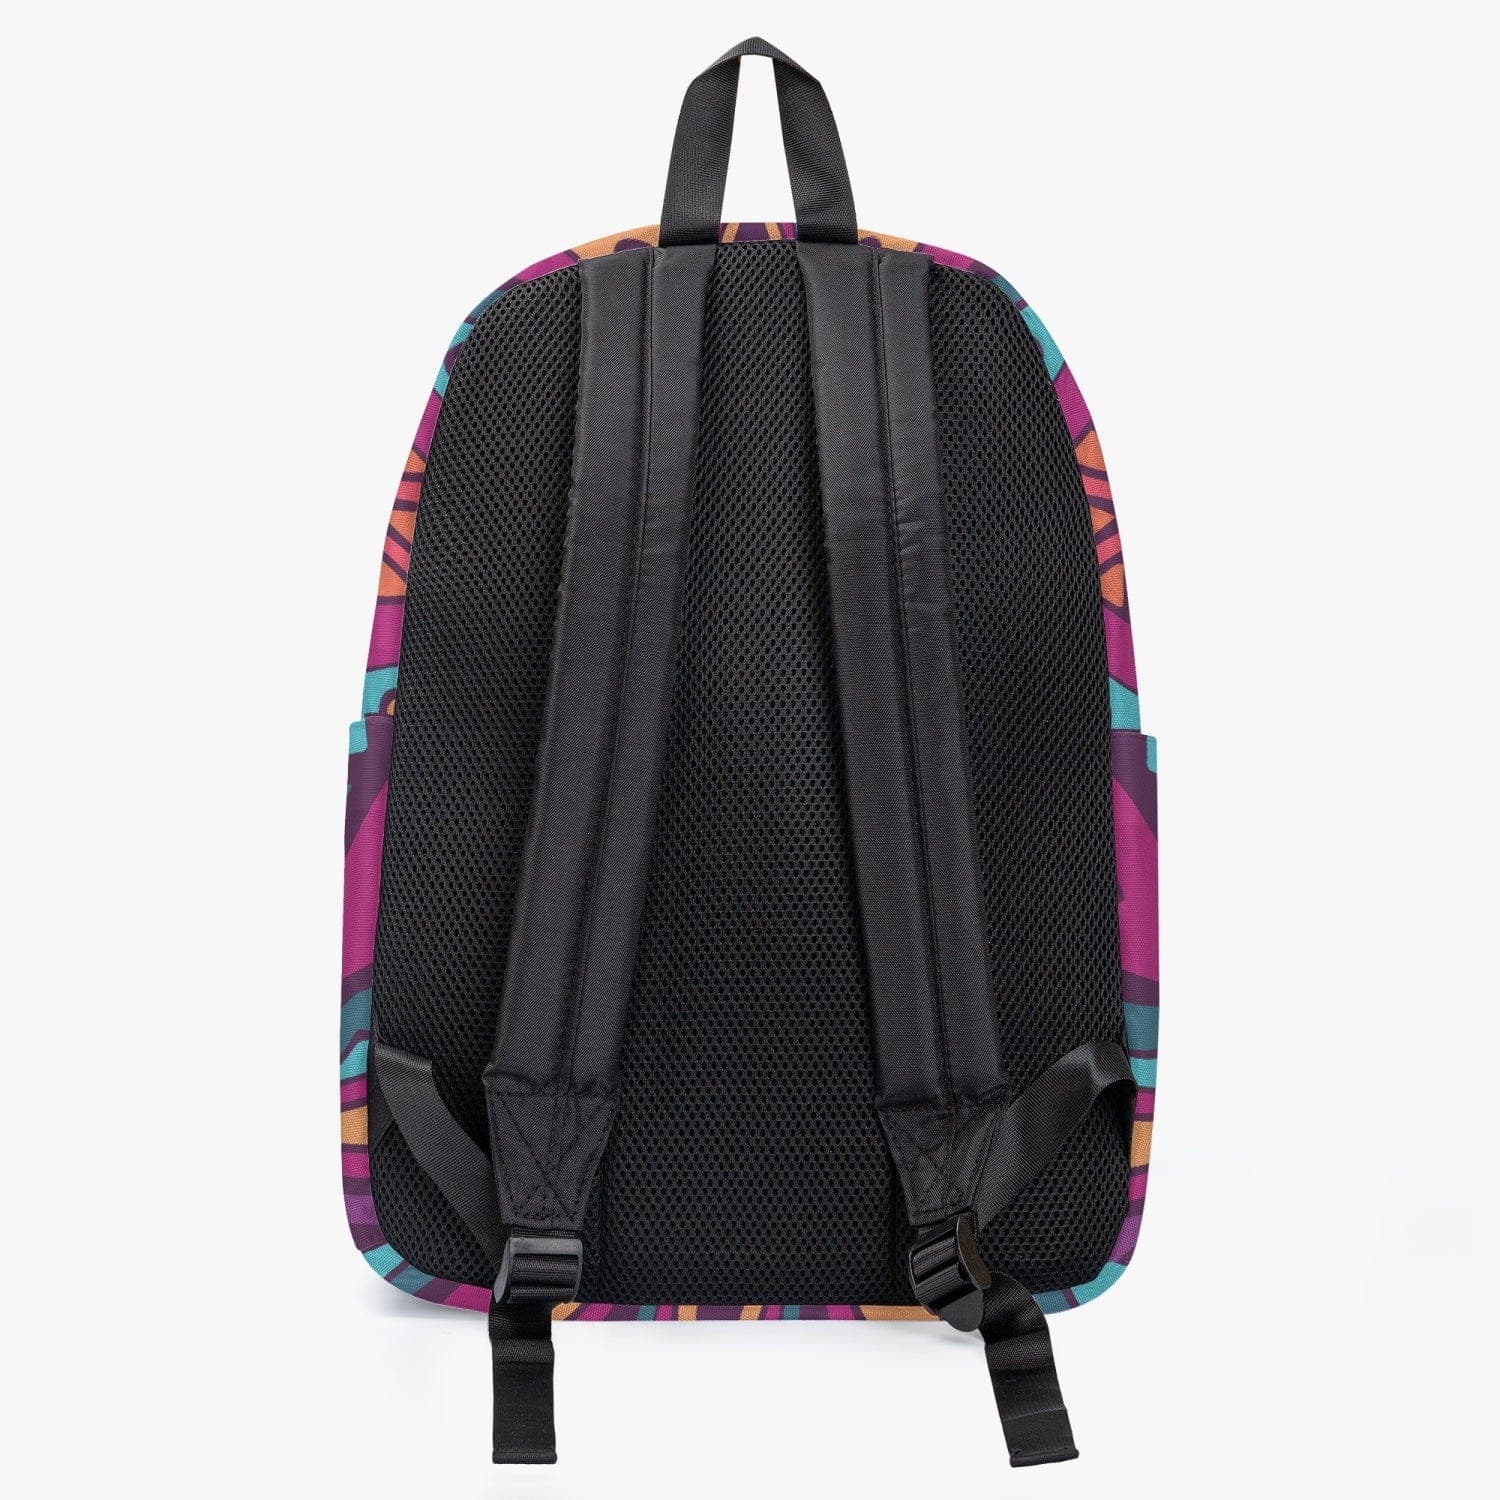 Colorful Etnic Bow Patterned Canvas Backpack designed by Sensus Studio Design